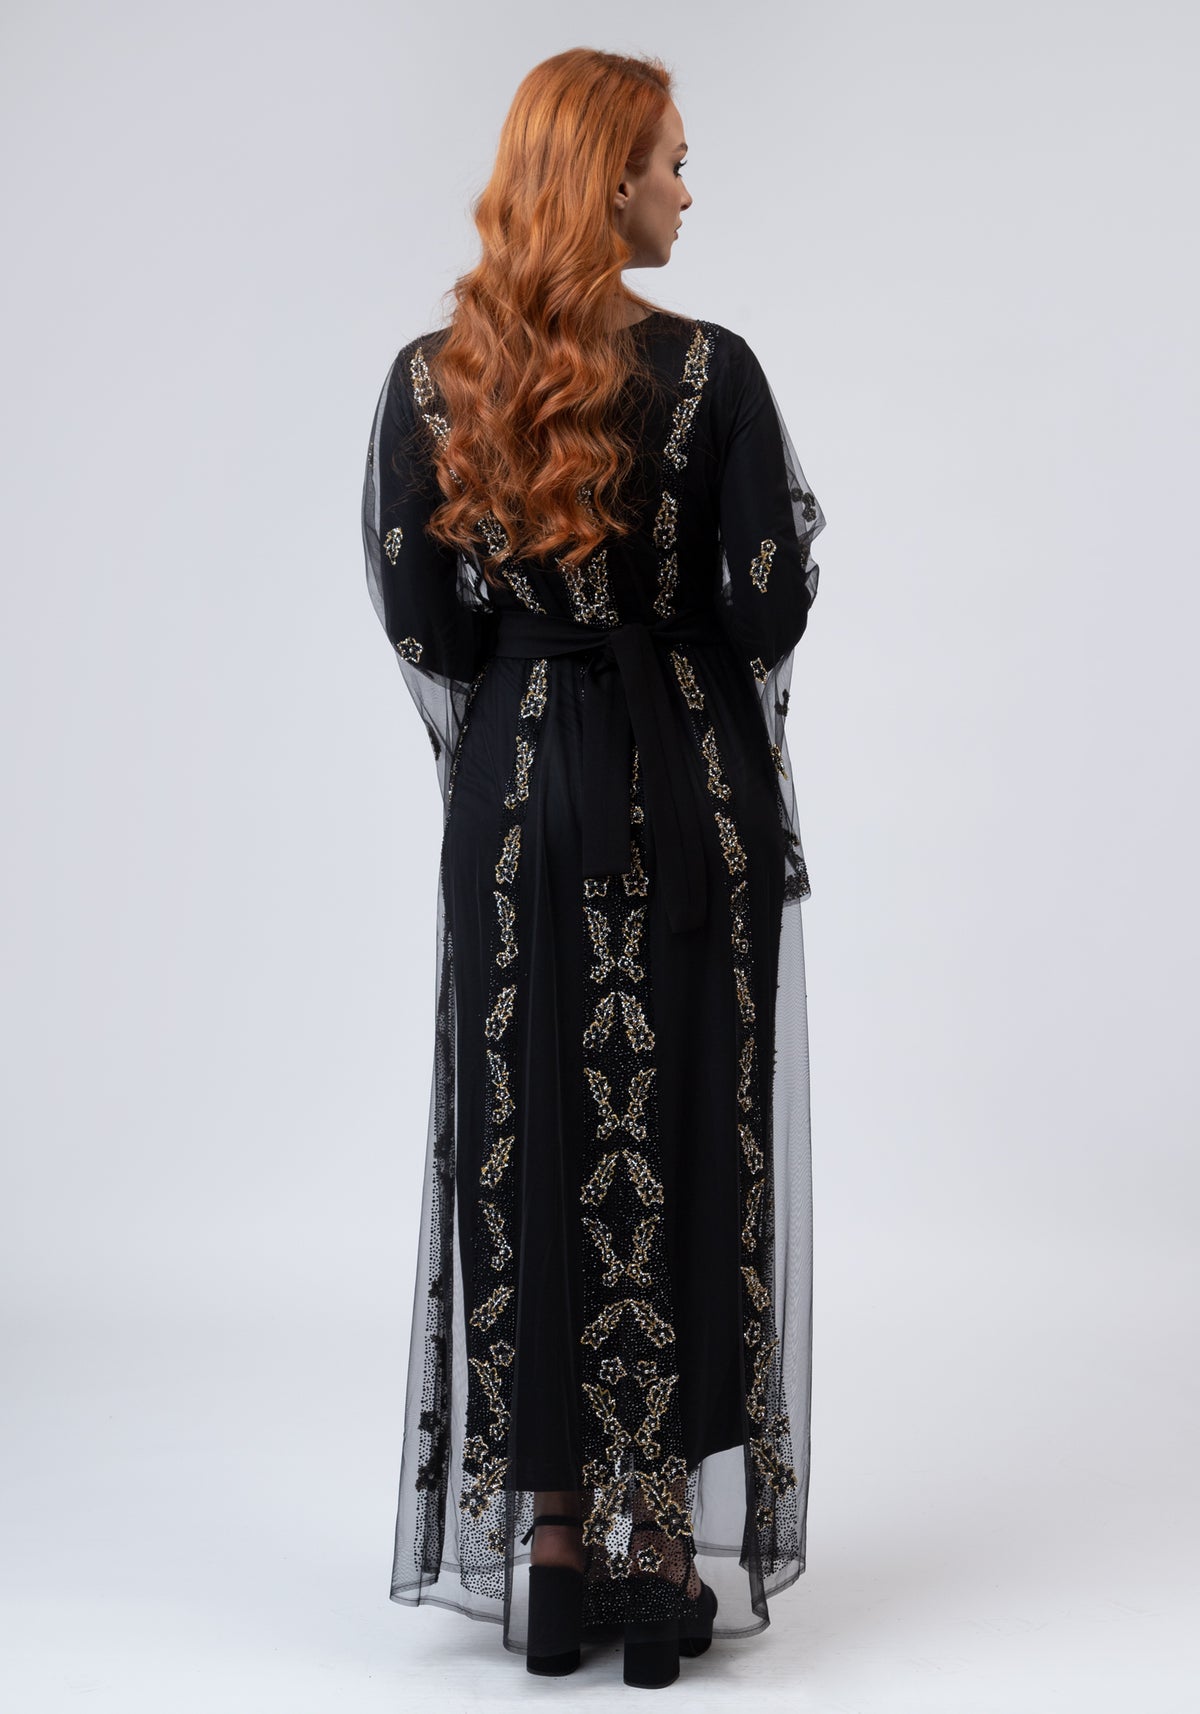 Long black dress with lace cape